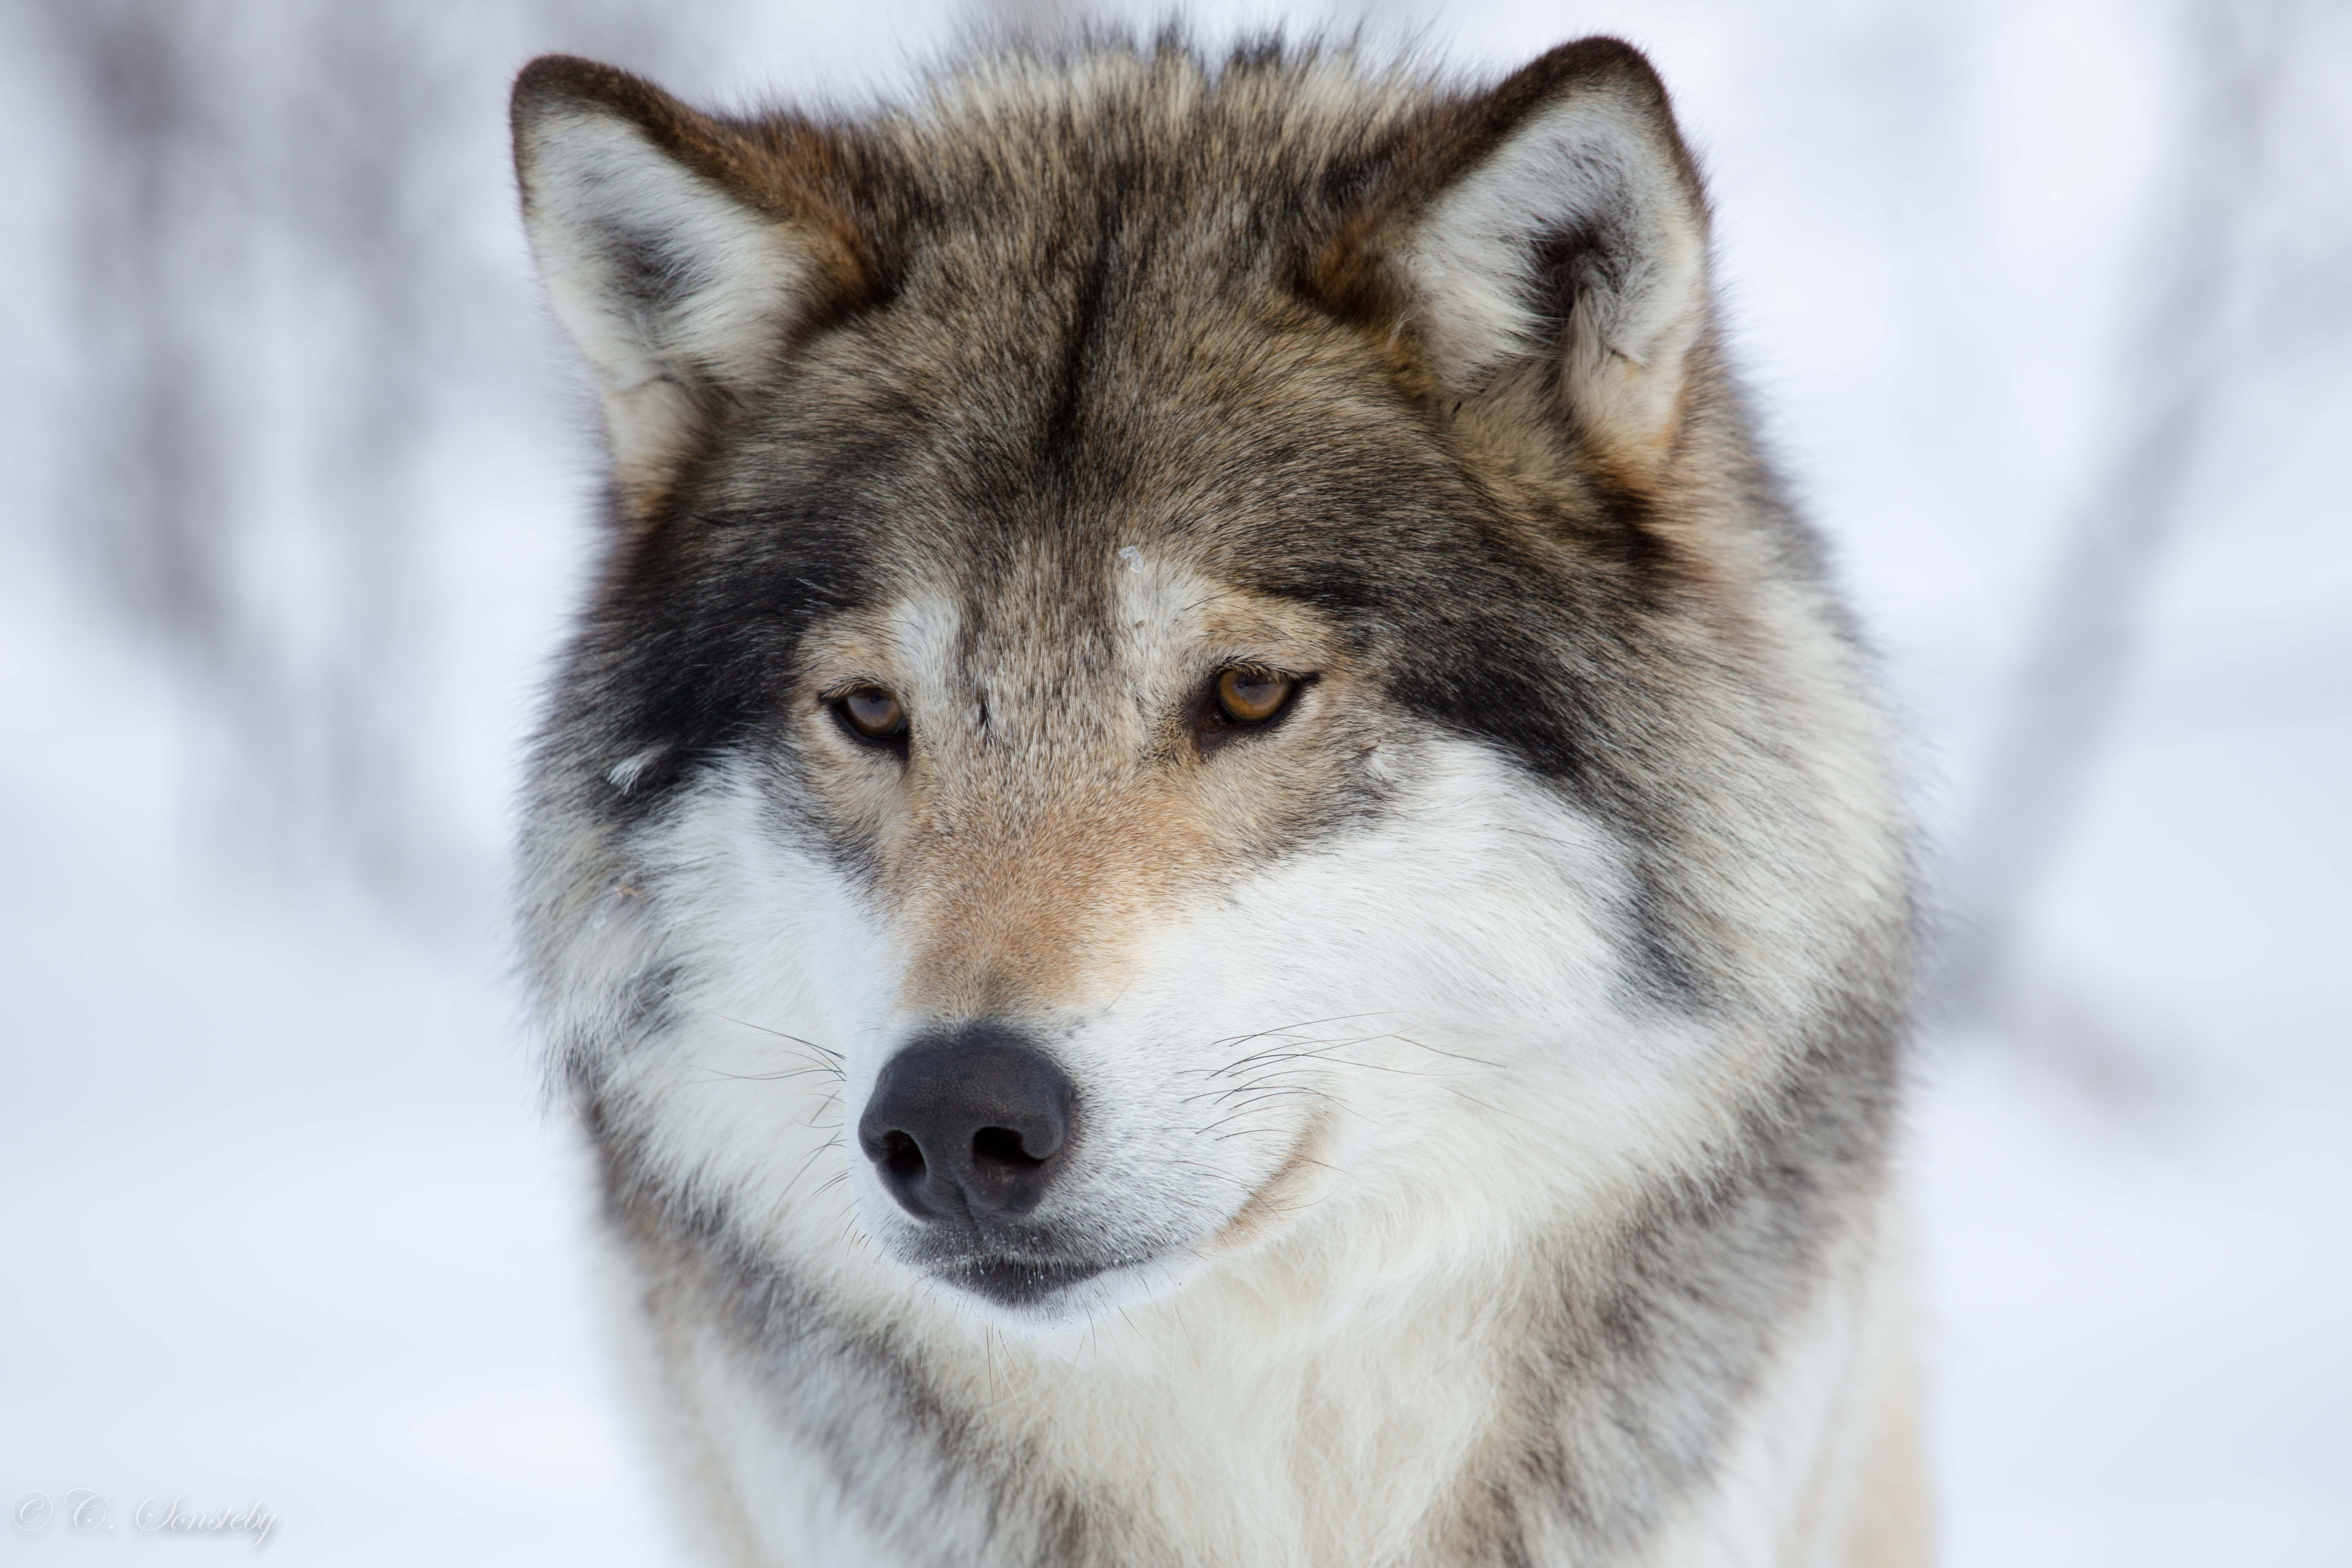 General 5760x3840 wolf animals outdoors brown eyes closeup watermarked